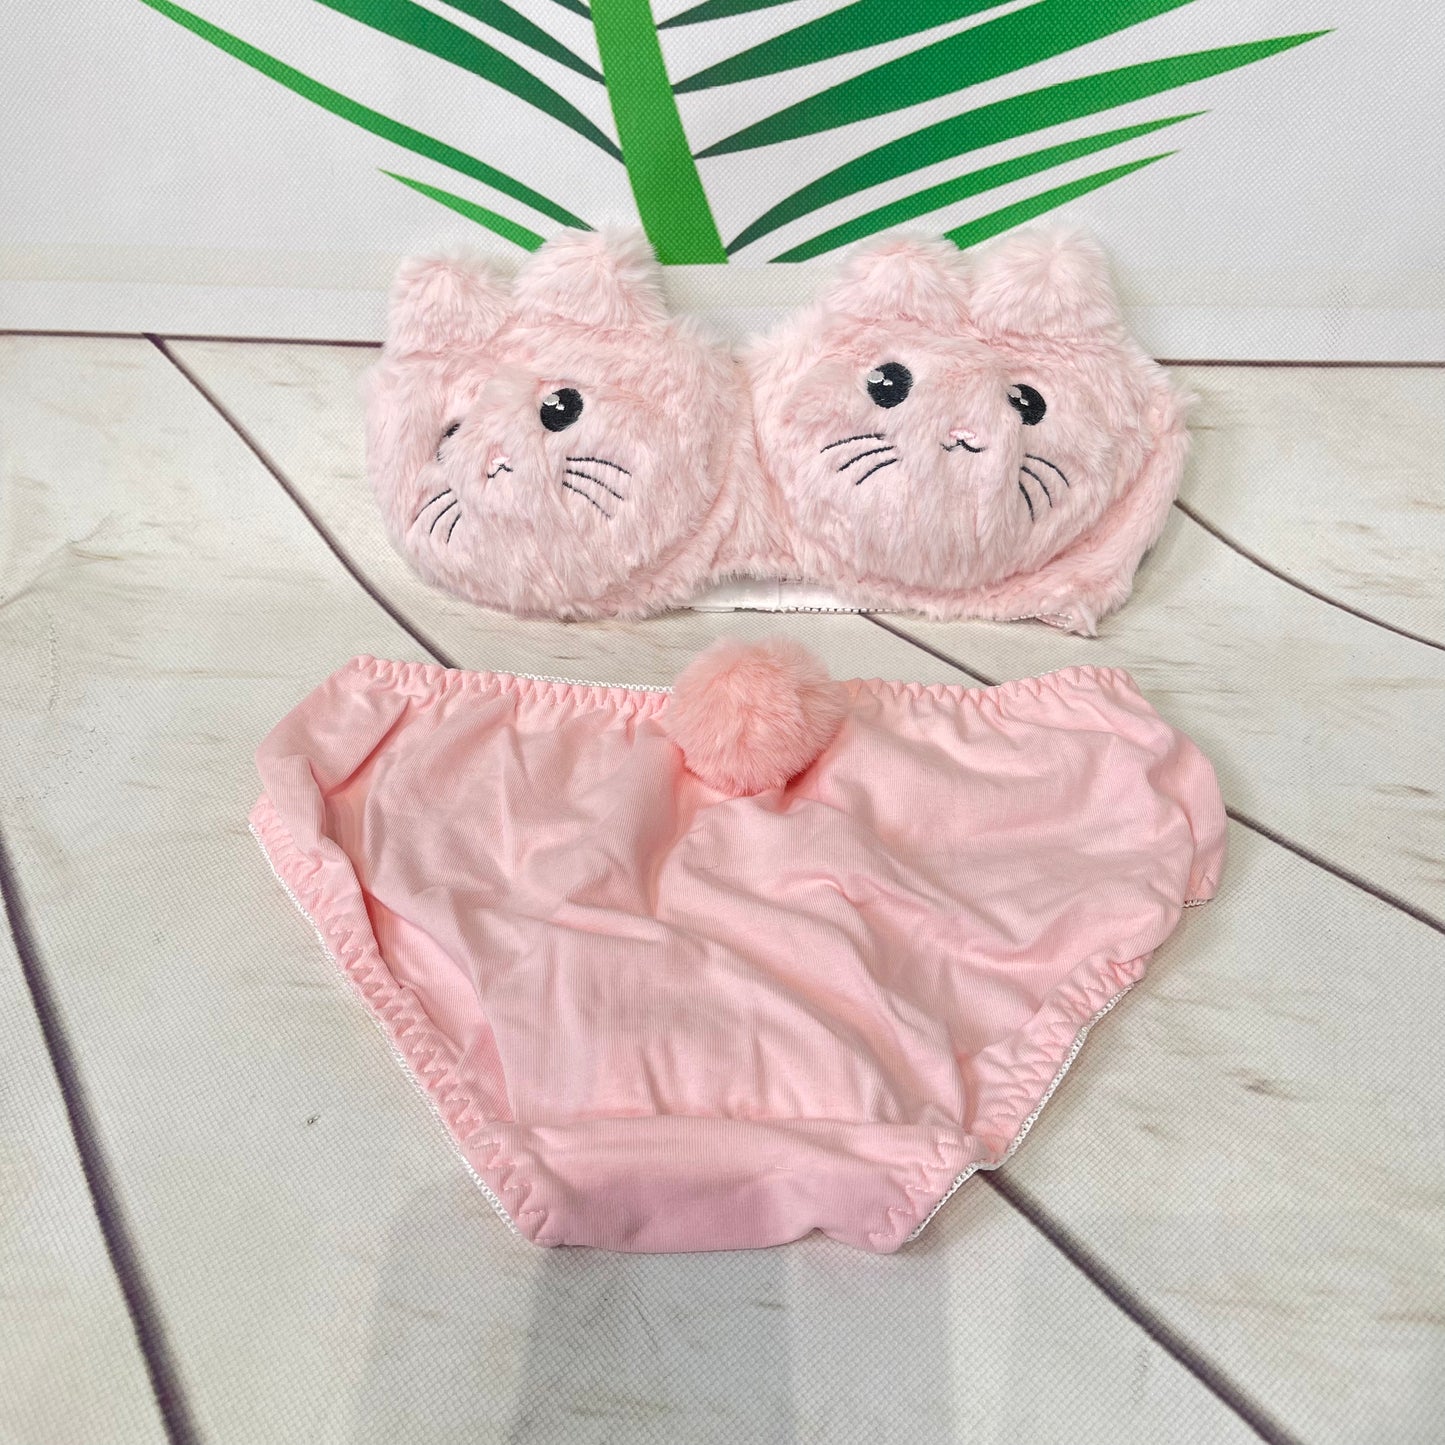 Light Pink Net Bra Panty Set - Manufacturer Exporter Supplier from